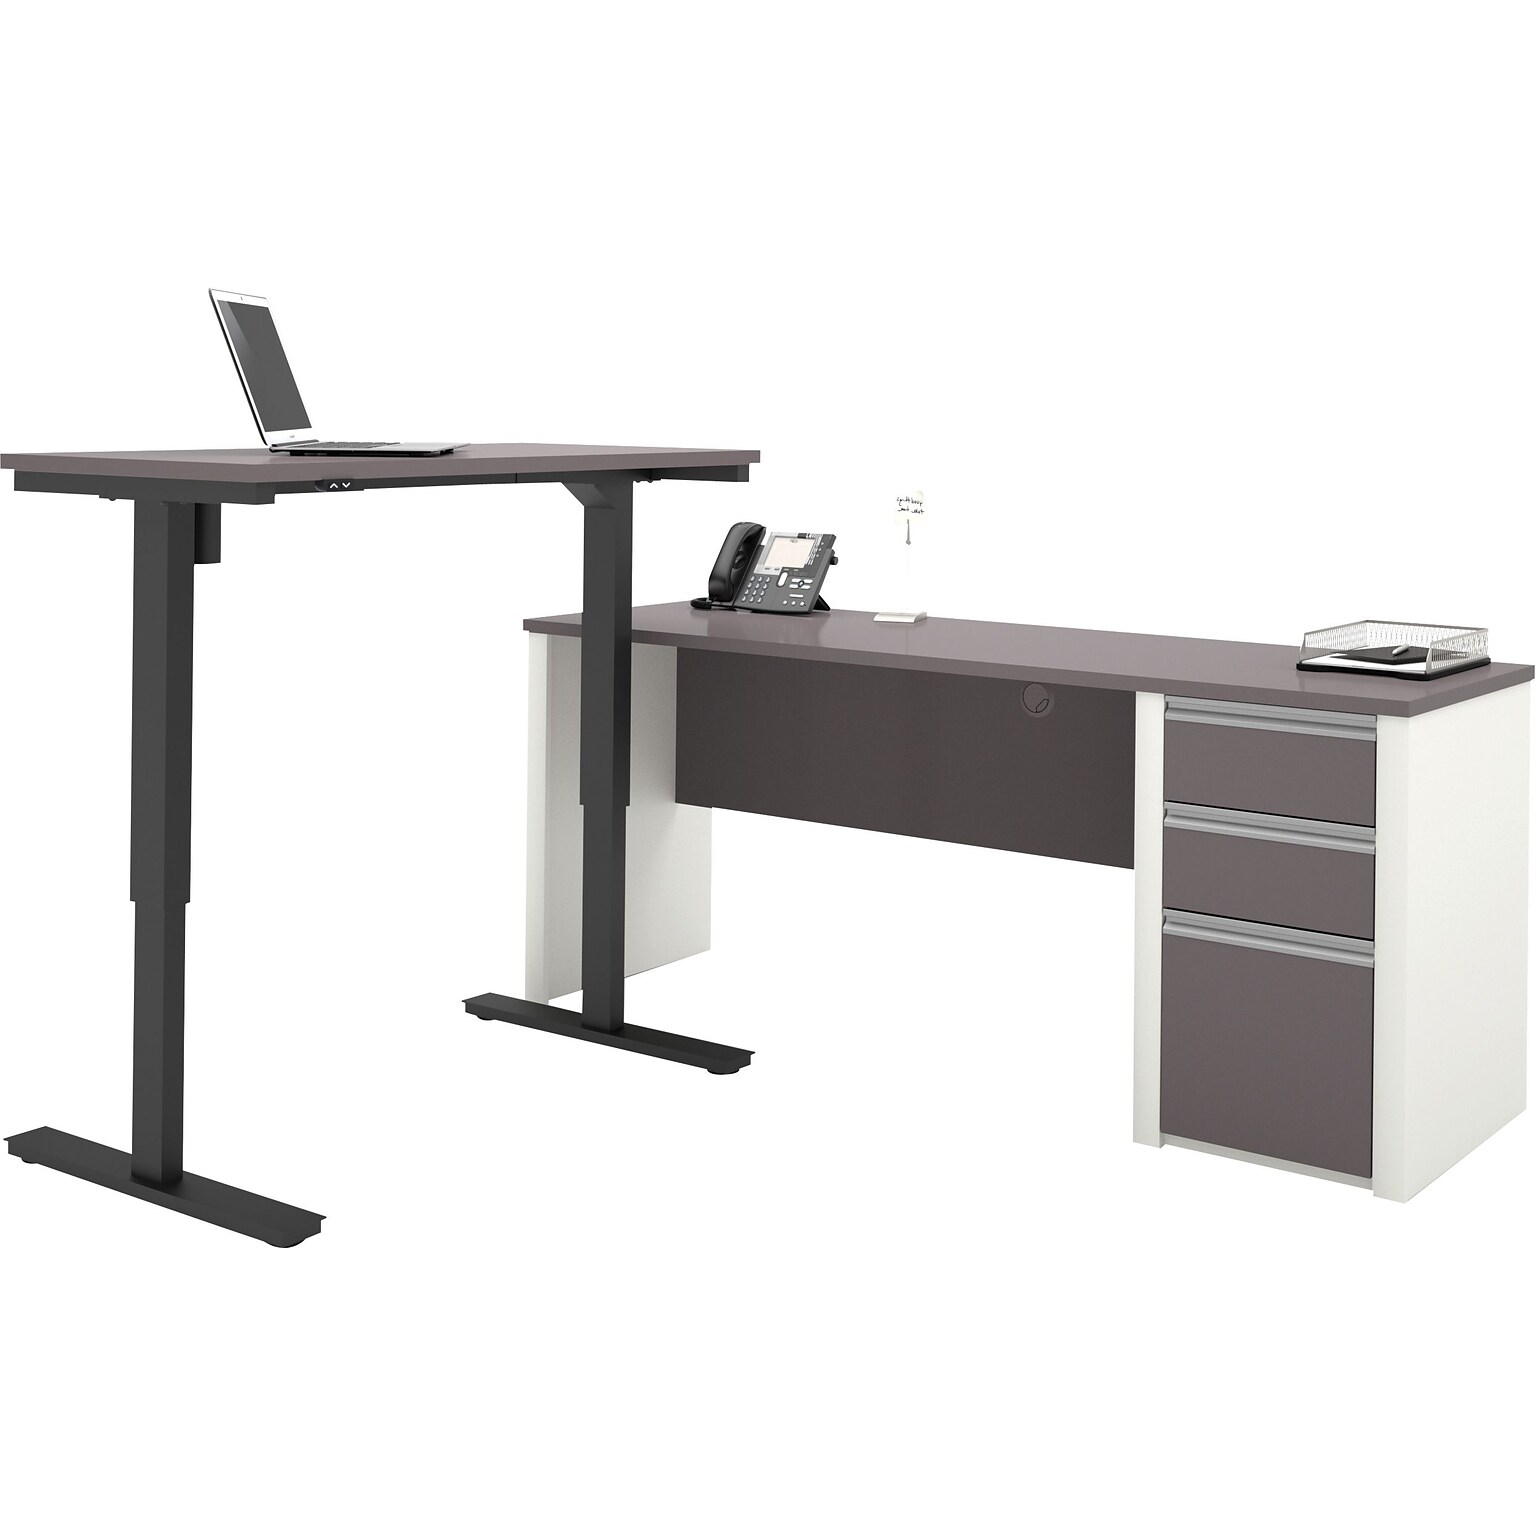 Bestar Connexion 72W L-Desk with Electric Height-Adjustable Desk, Slate/Sandstone (93885-59)